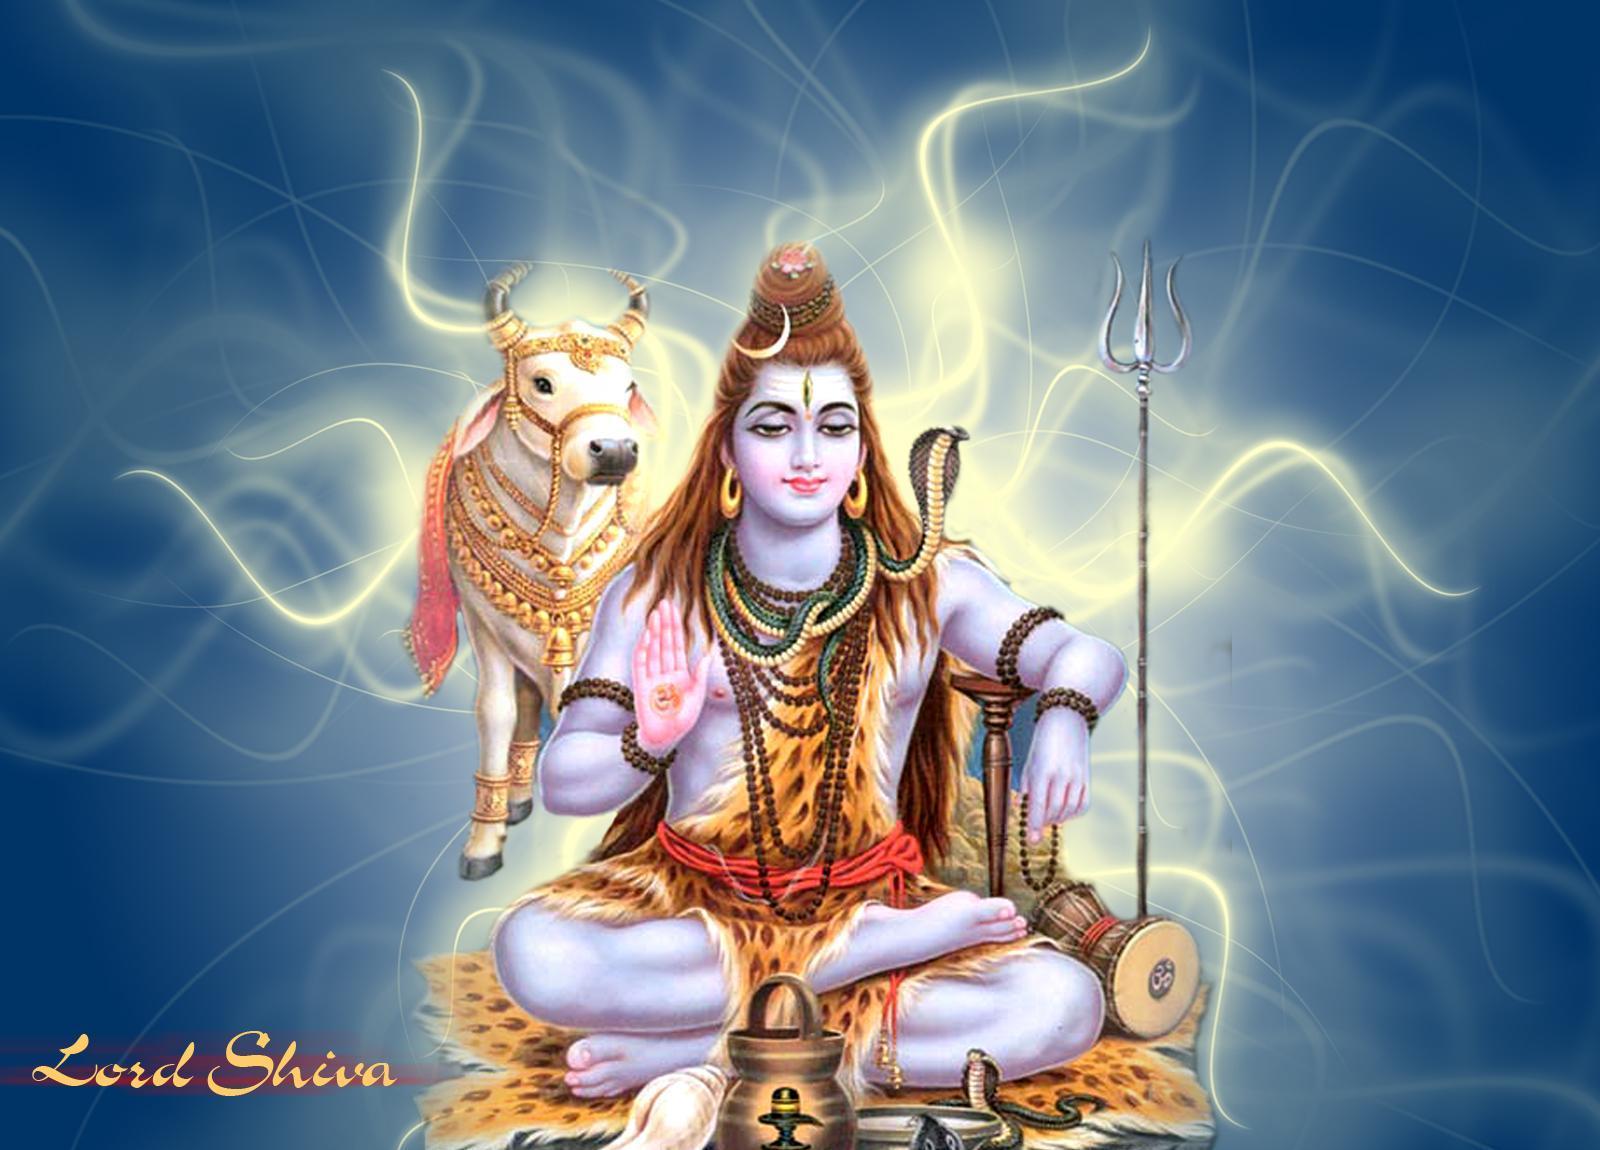 Free download Wallpaper Hindu God Shiva Wallpaper Lord Shiva Gets